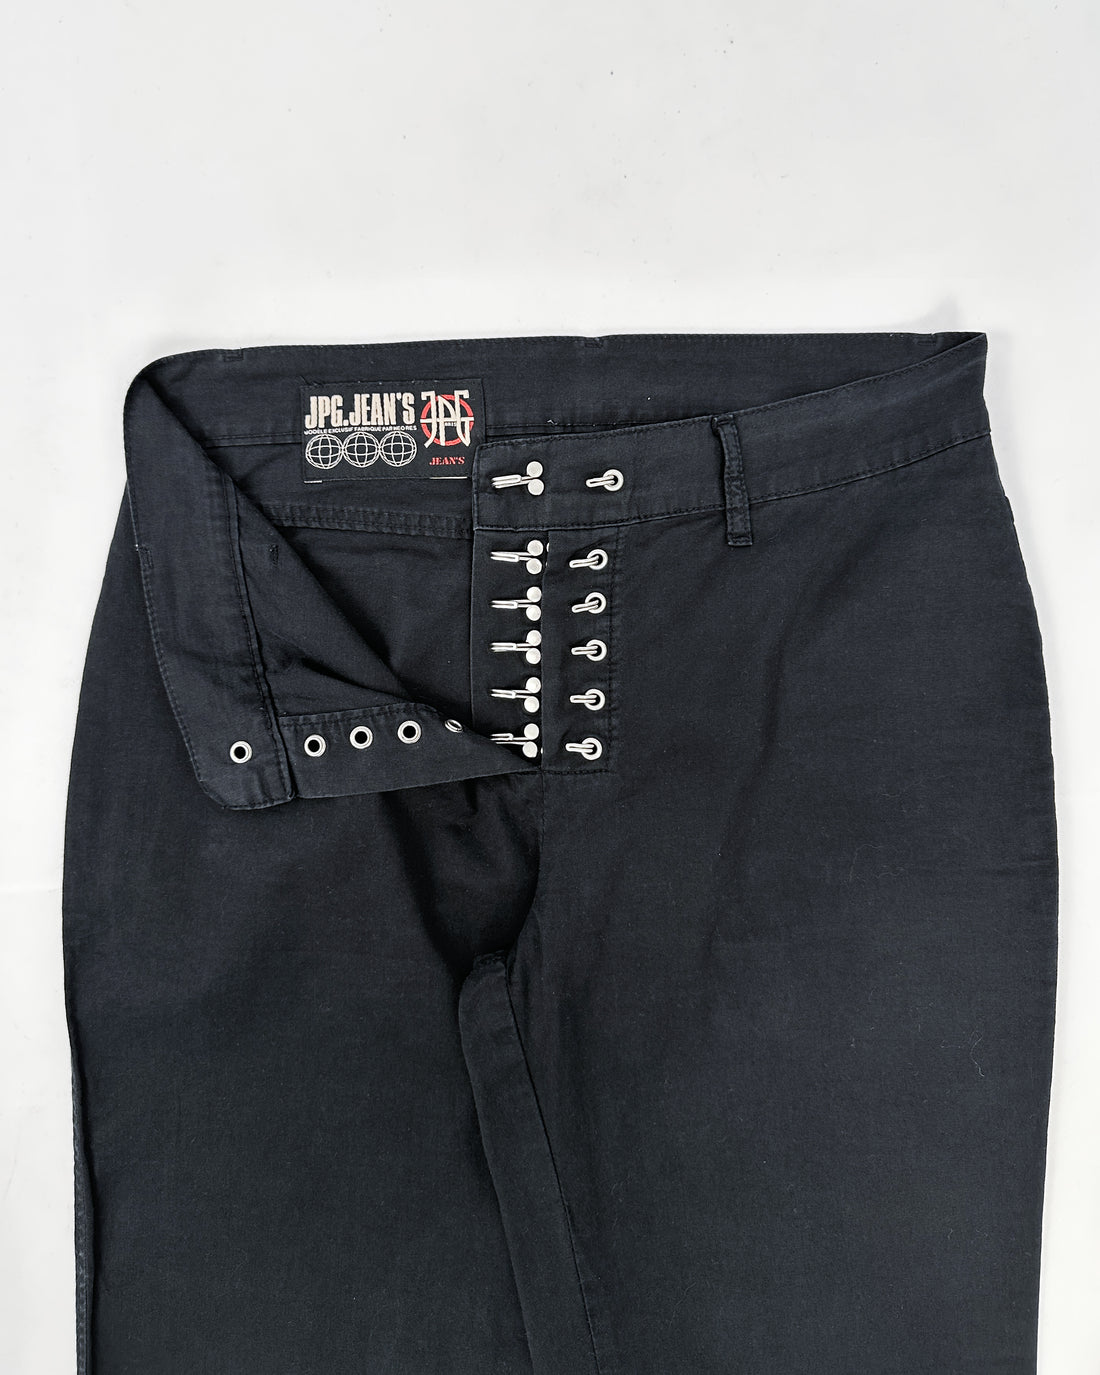 Jean Paul Gaultier Black Fastener Pants 2000's